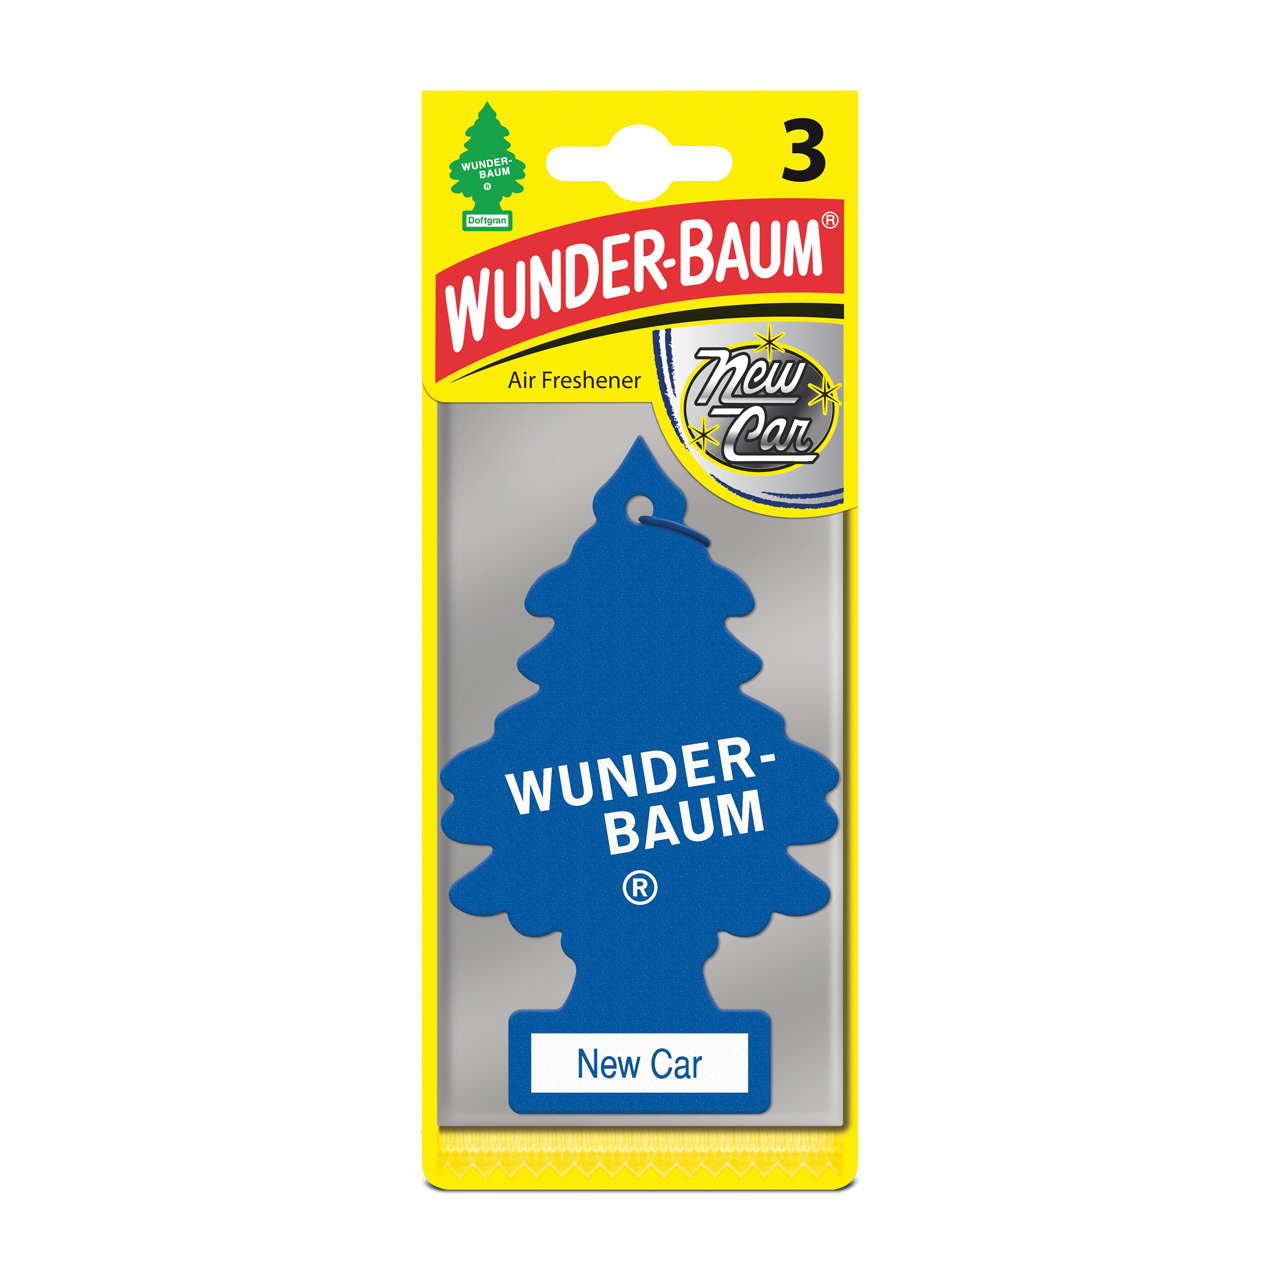 Wunder-Baum Air Freshener New Car 3-Pack - Now 29% Savings